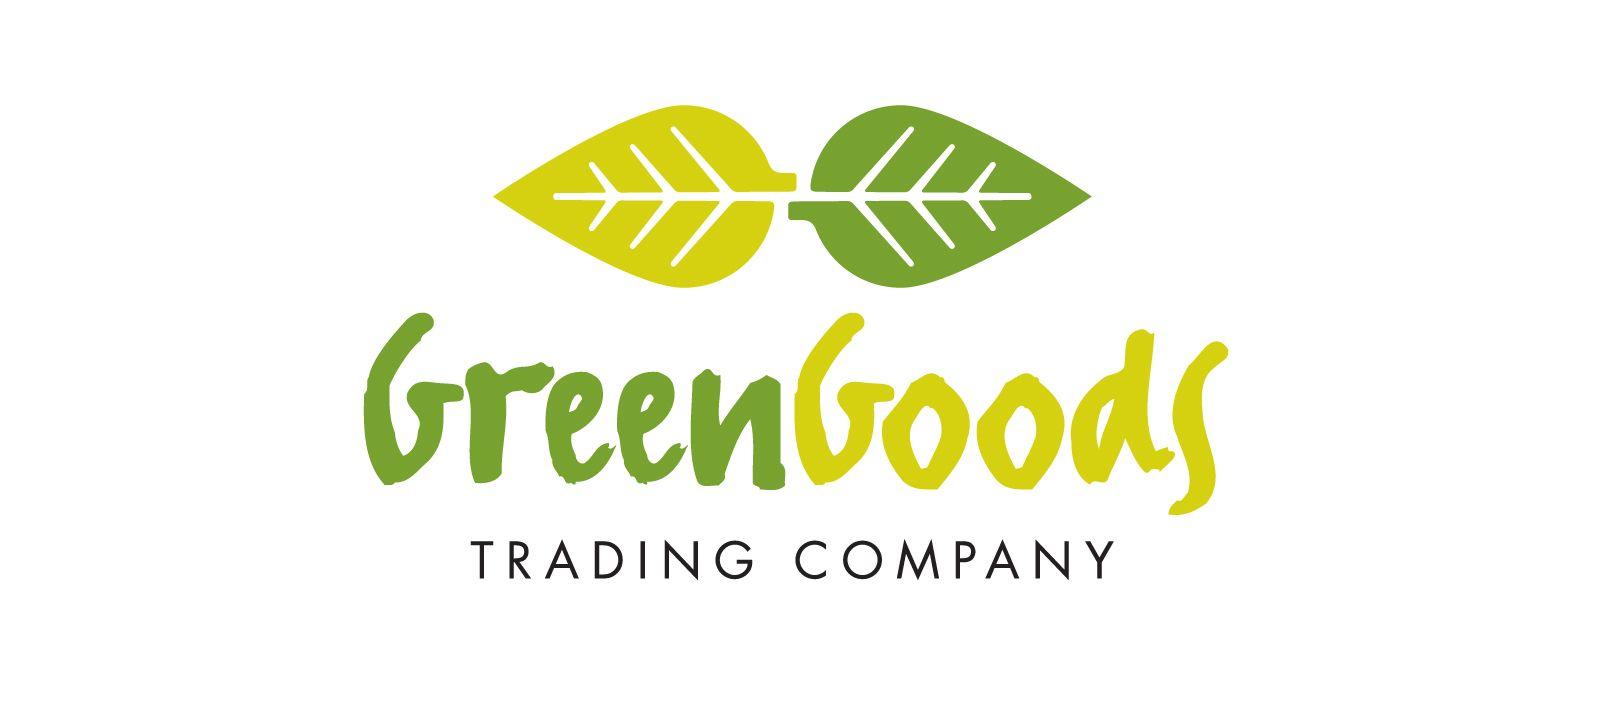 Green Goods Logo - Logos